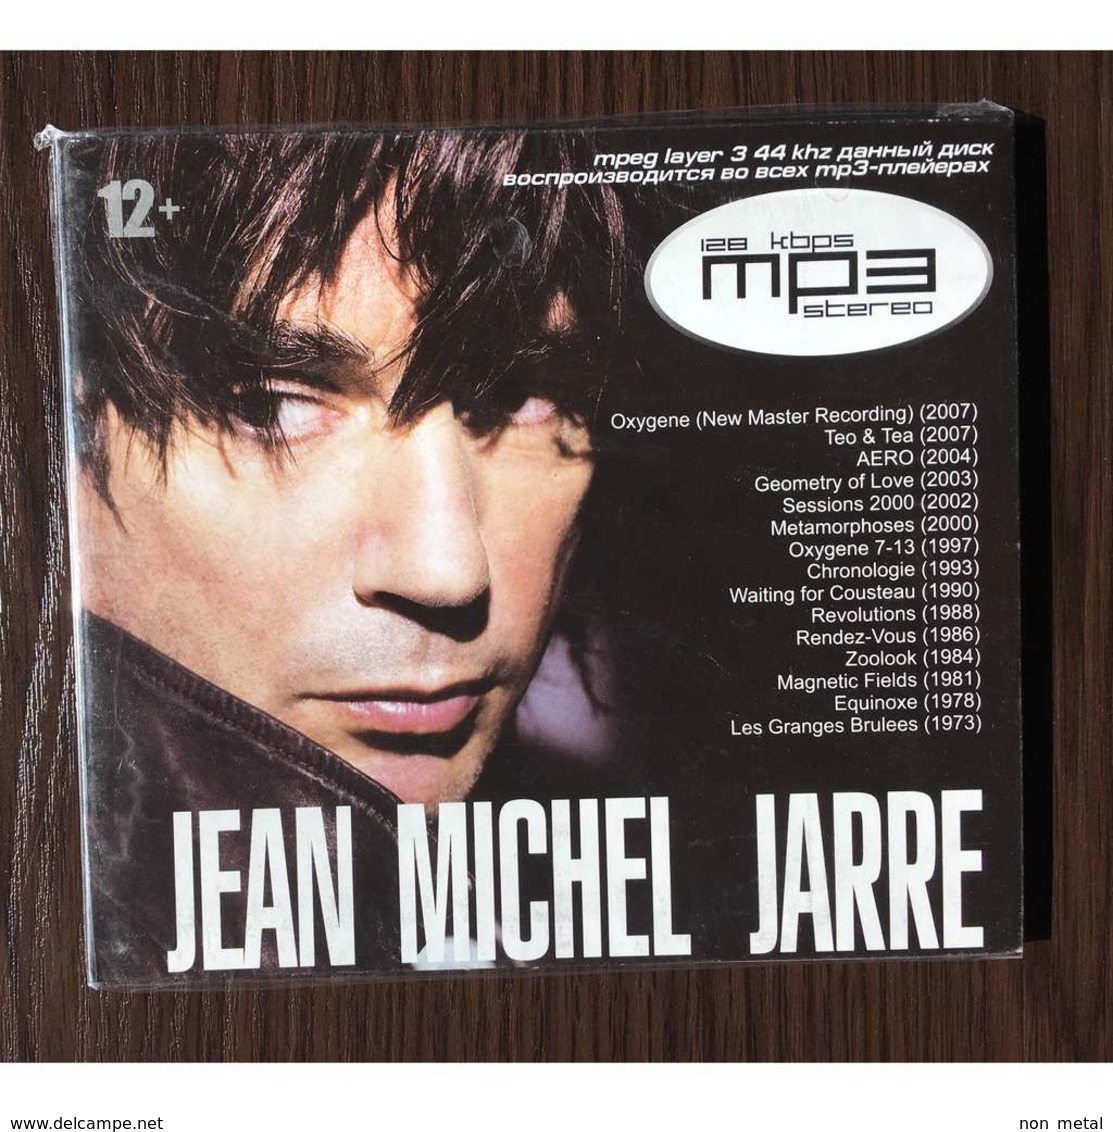 Jean Michel Jarre: MP3 Collection 15 Albums (Online Media Rec) Rus - World Music